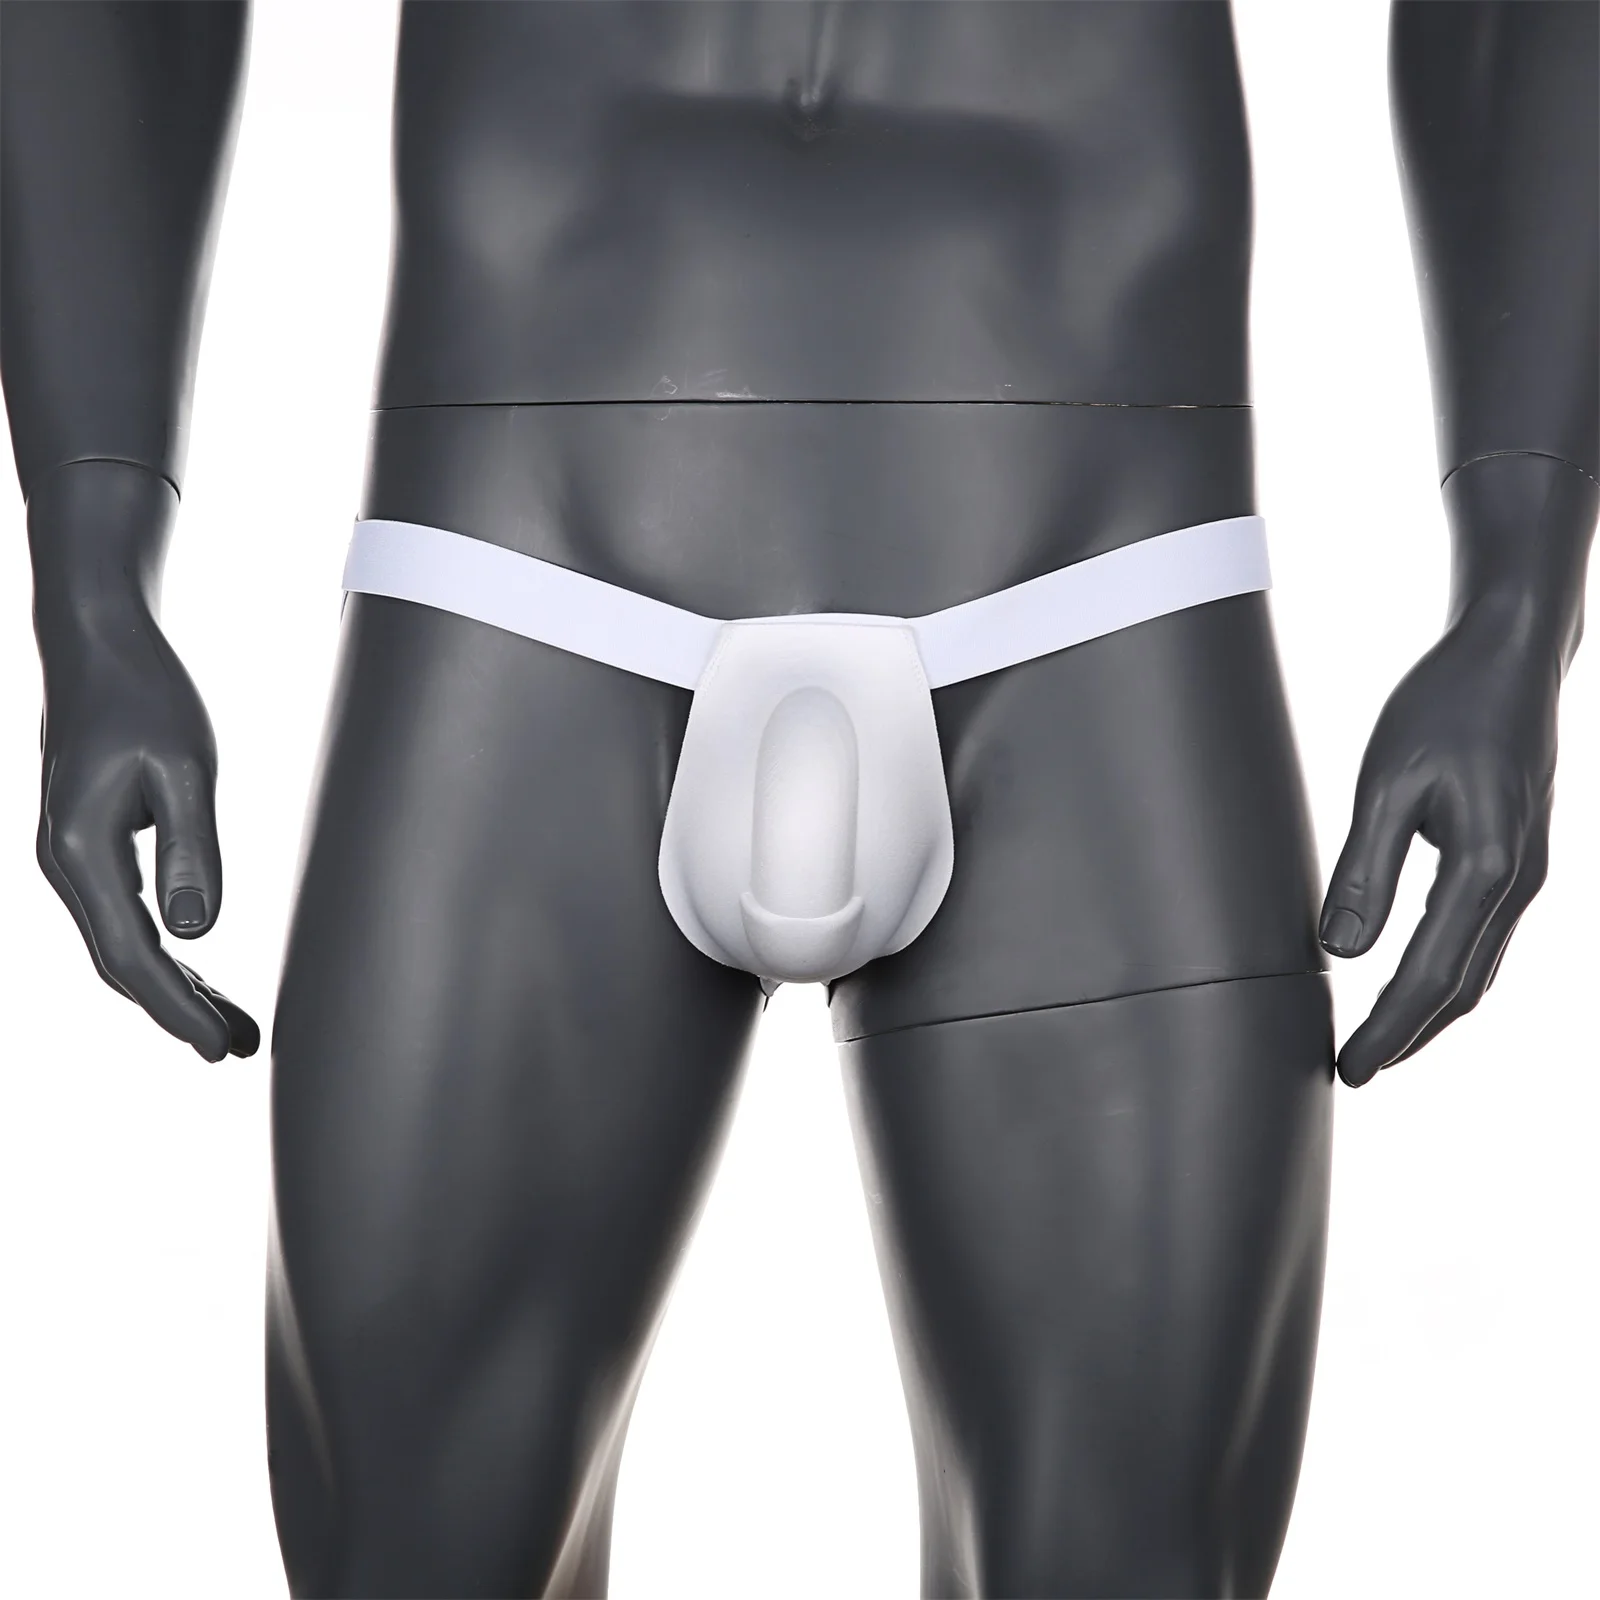 

CLEVER-MENMODE Sponge Pad Underwear Sexy Enhancer Penis Cup Underpants Bulge Pouch Panties Jockstrap Thong G String Open Butt